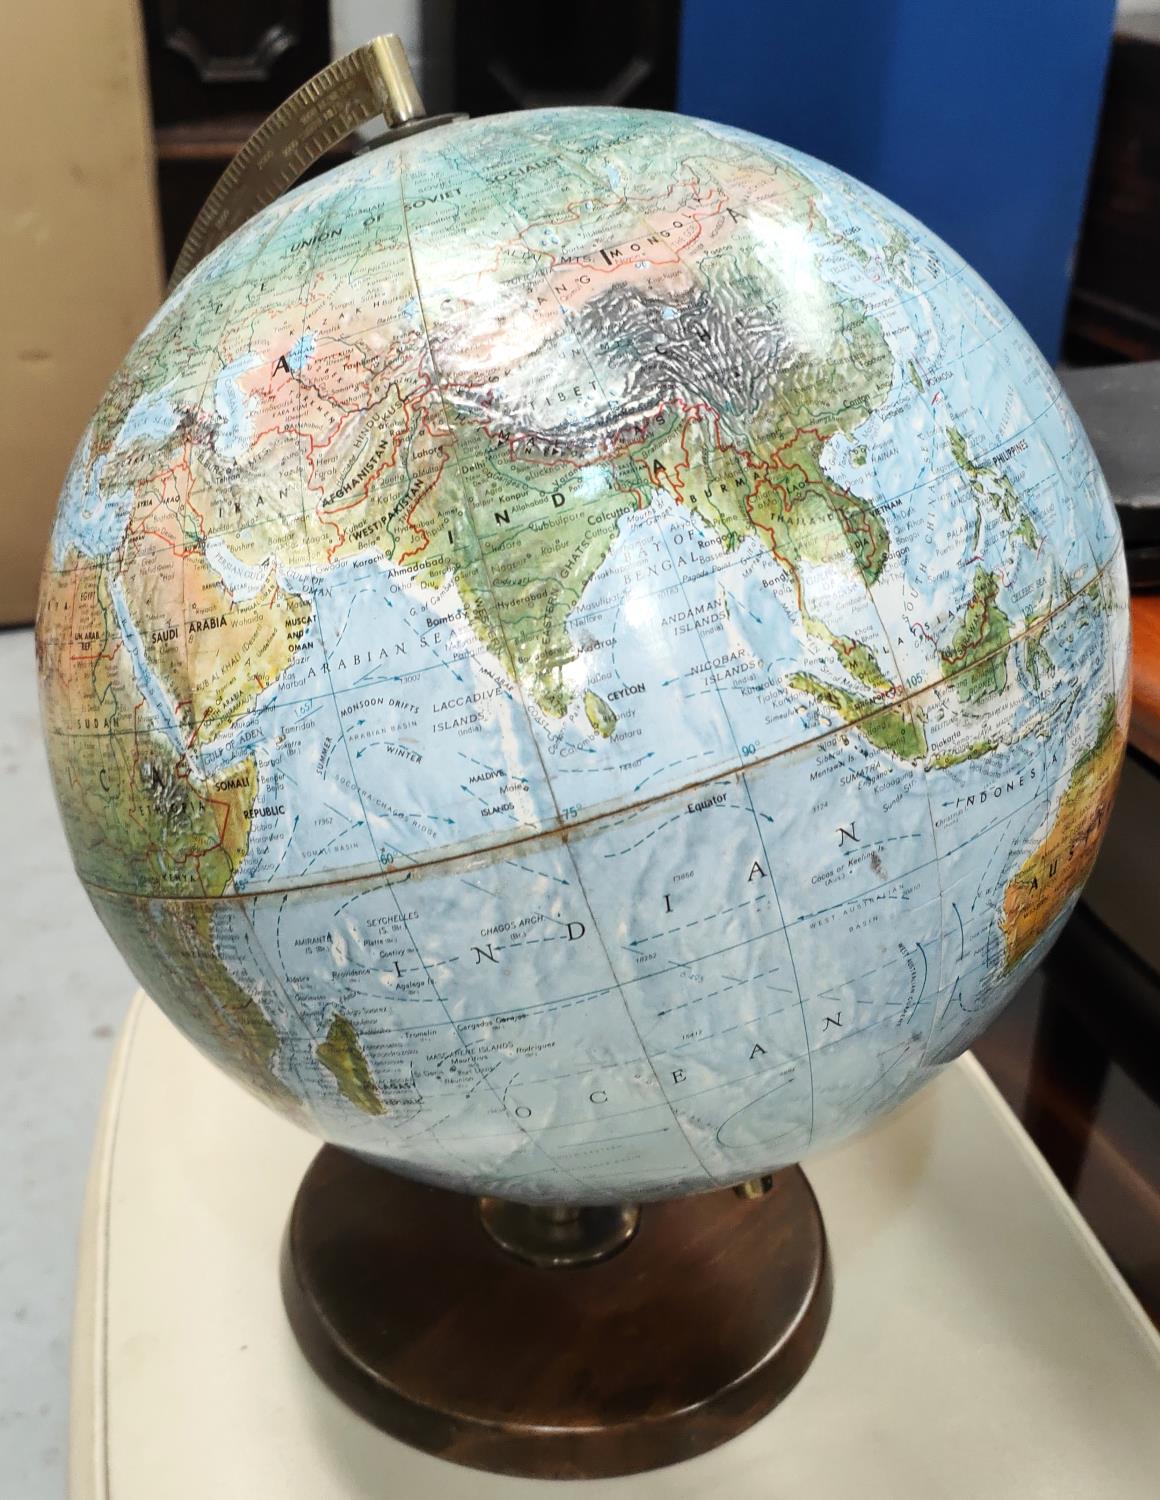 A vintage student's globe